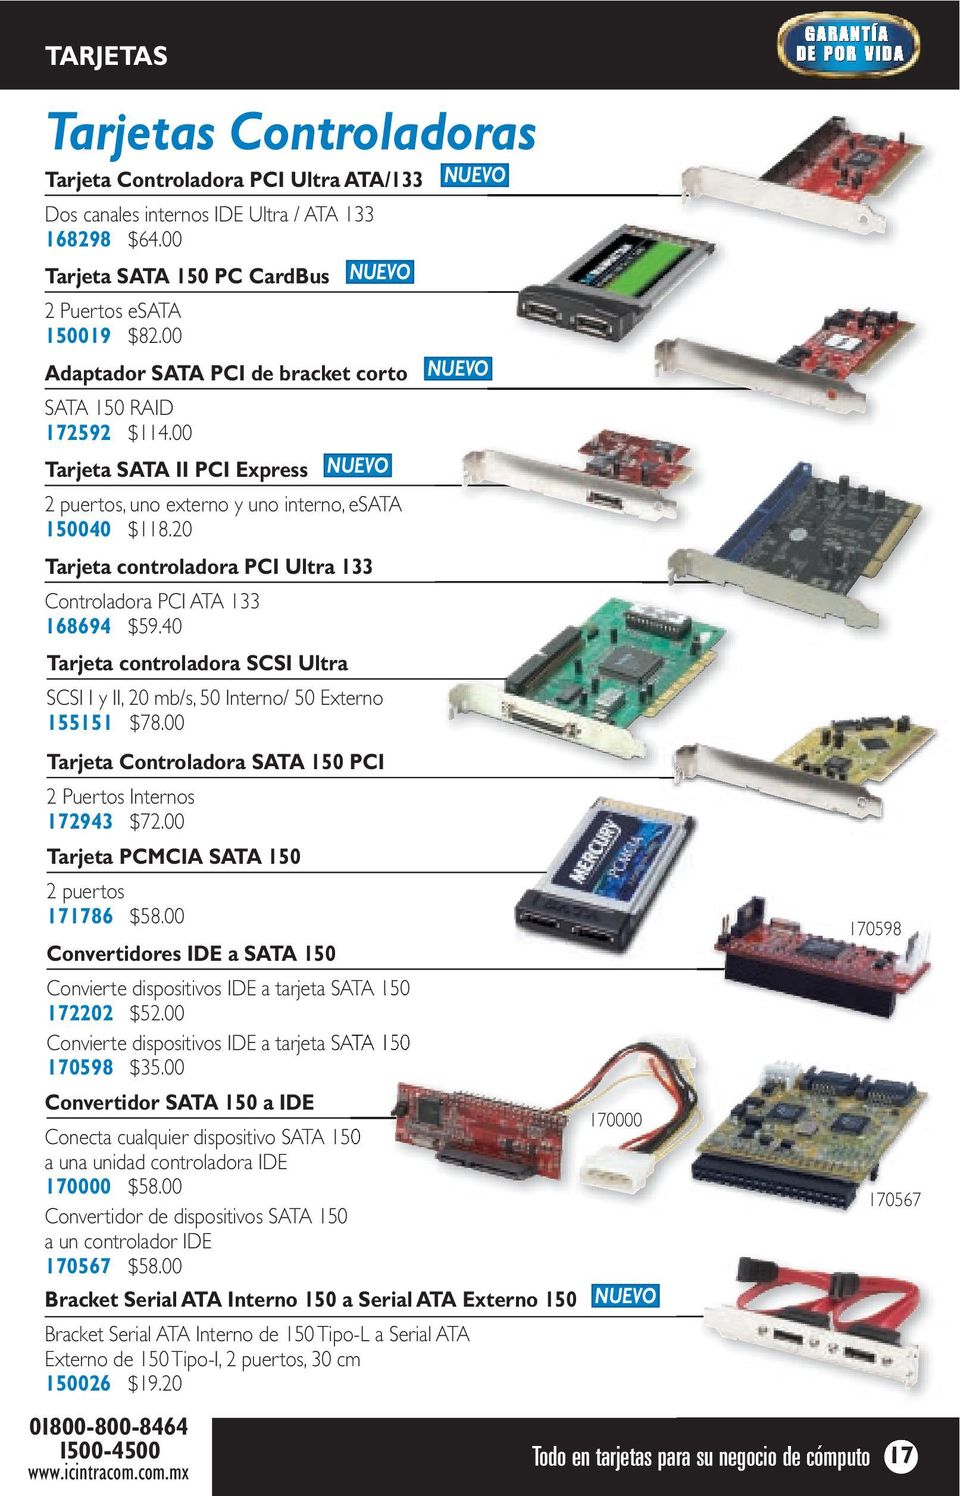 20 Tarjeta controladora PCI Ultra 133 Controladora PCI ATA 133 168694 $59.40 Tarjeta controladora SCSI Ultra SCSI I y II, 20 mb/s, 50 Interno/ 50 Externo 155151 $78.